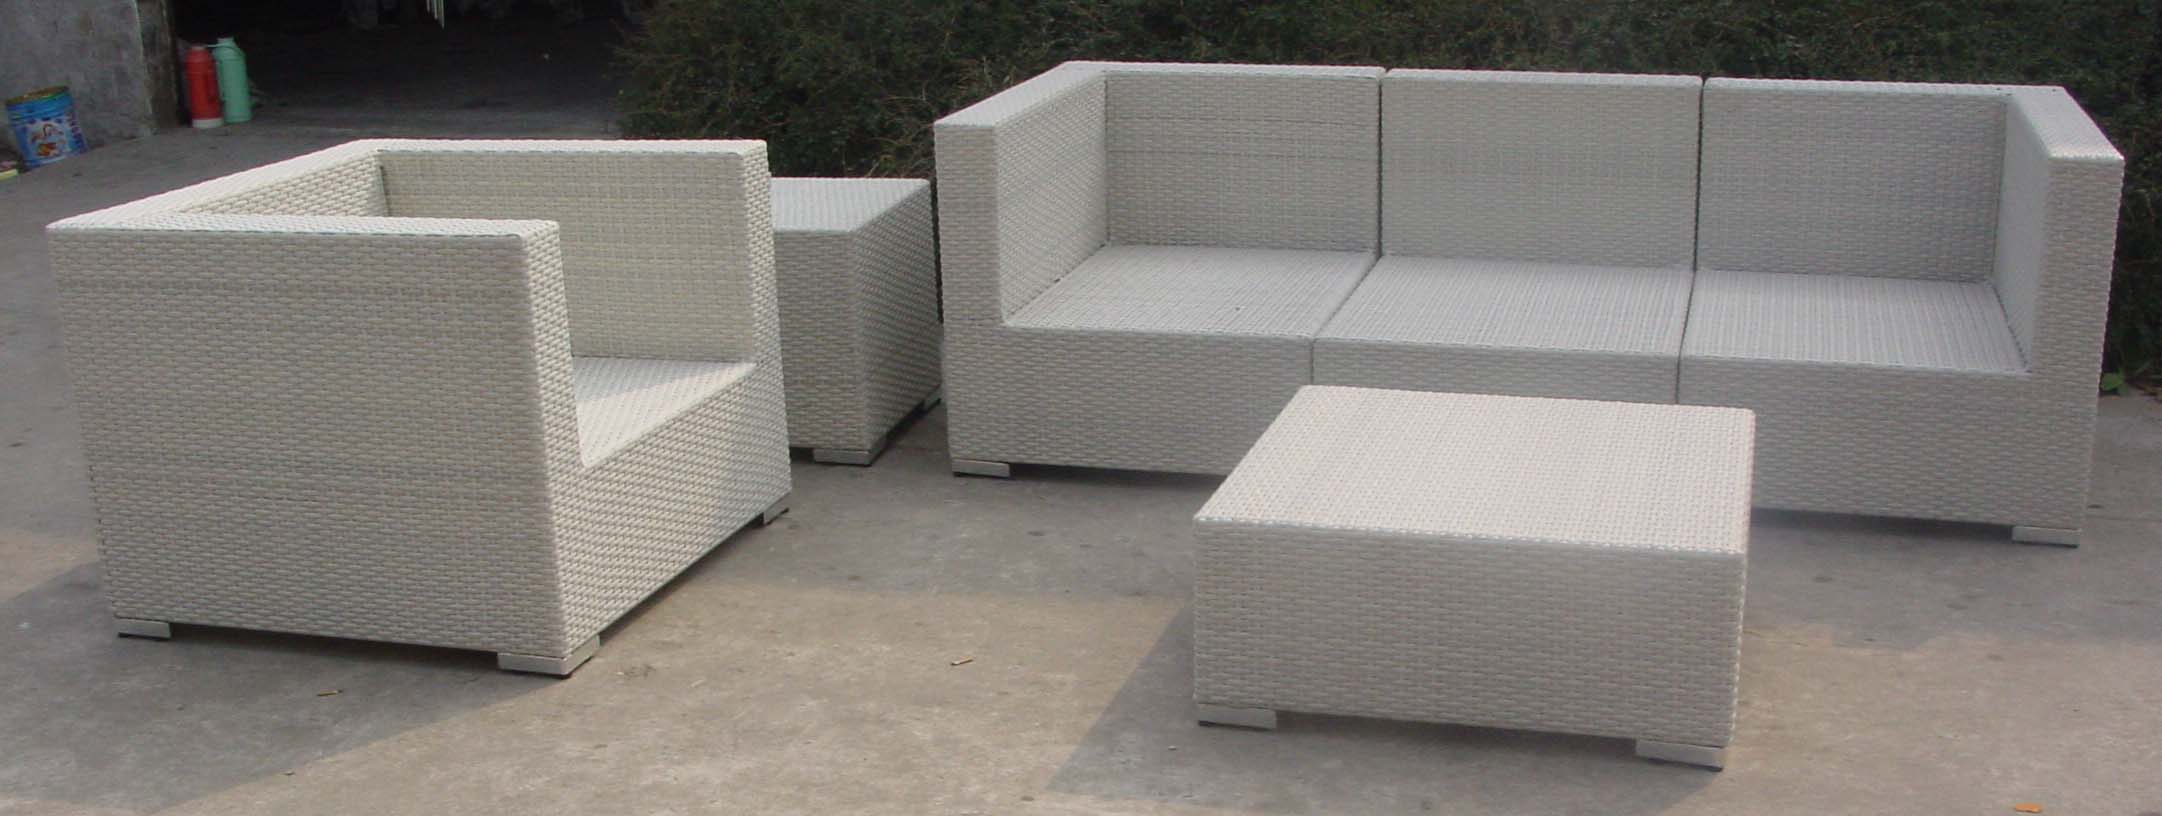 aluminium wicker sofa for outdoor and indoor use